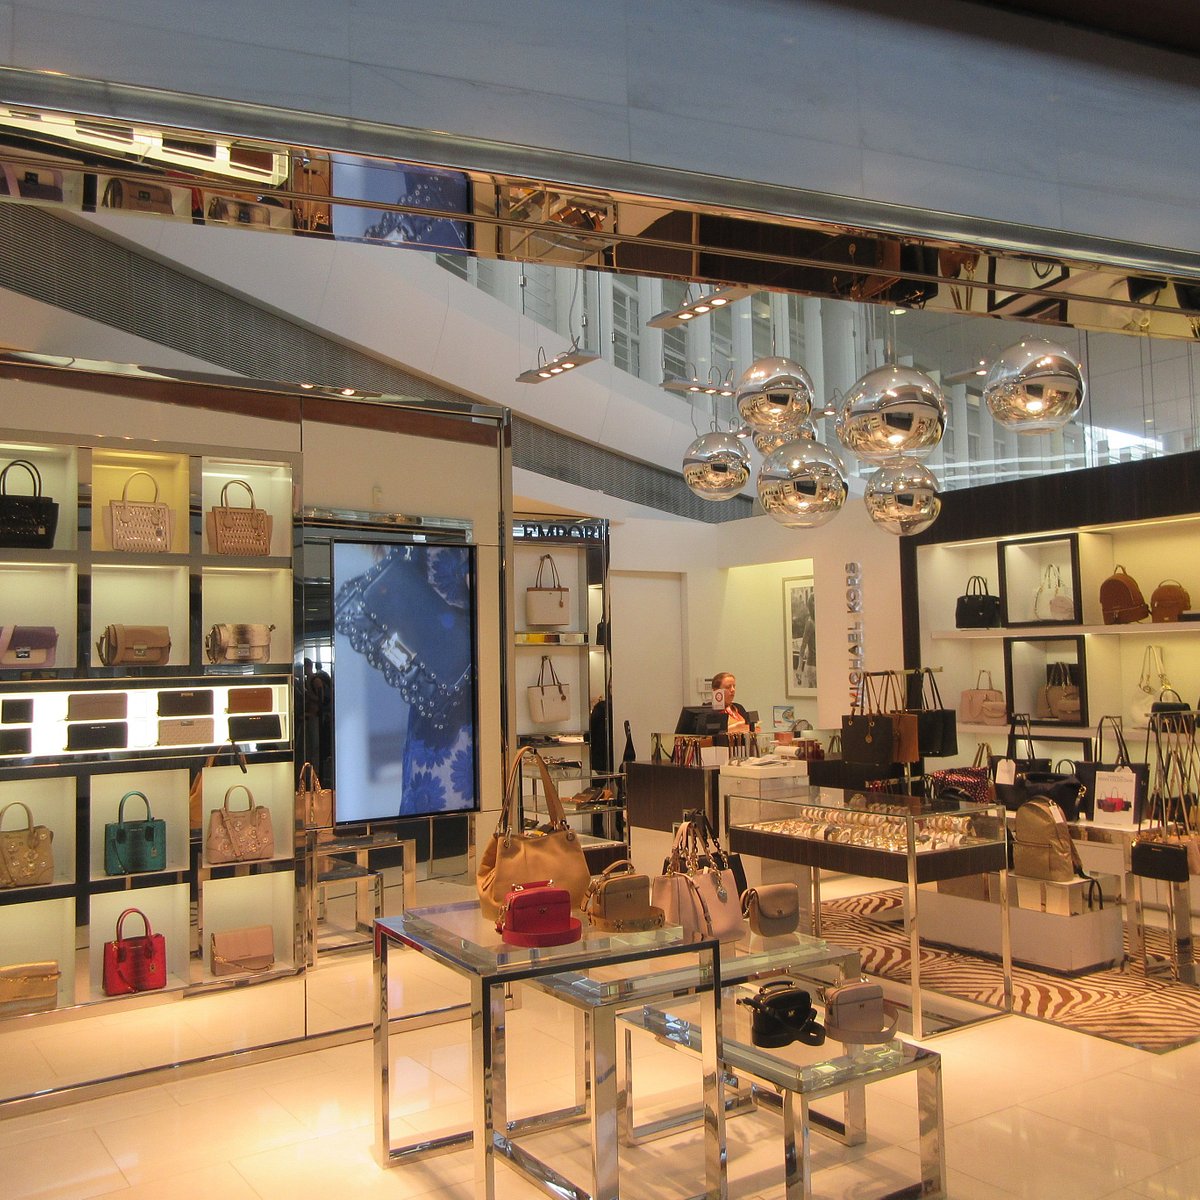 SINGAPORE - NOVEMBER 09, 2015: interior of Michael Kors store in